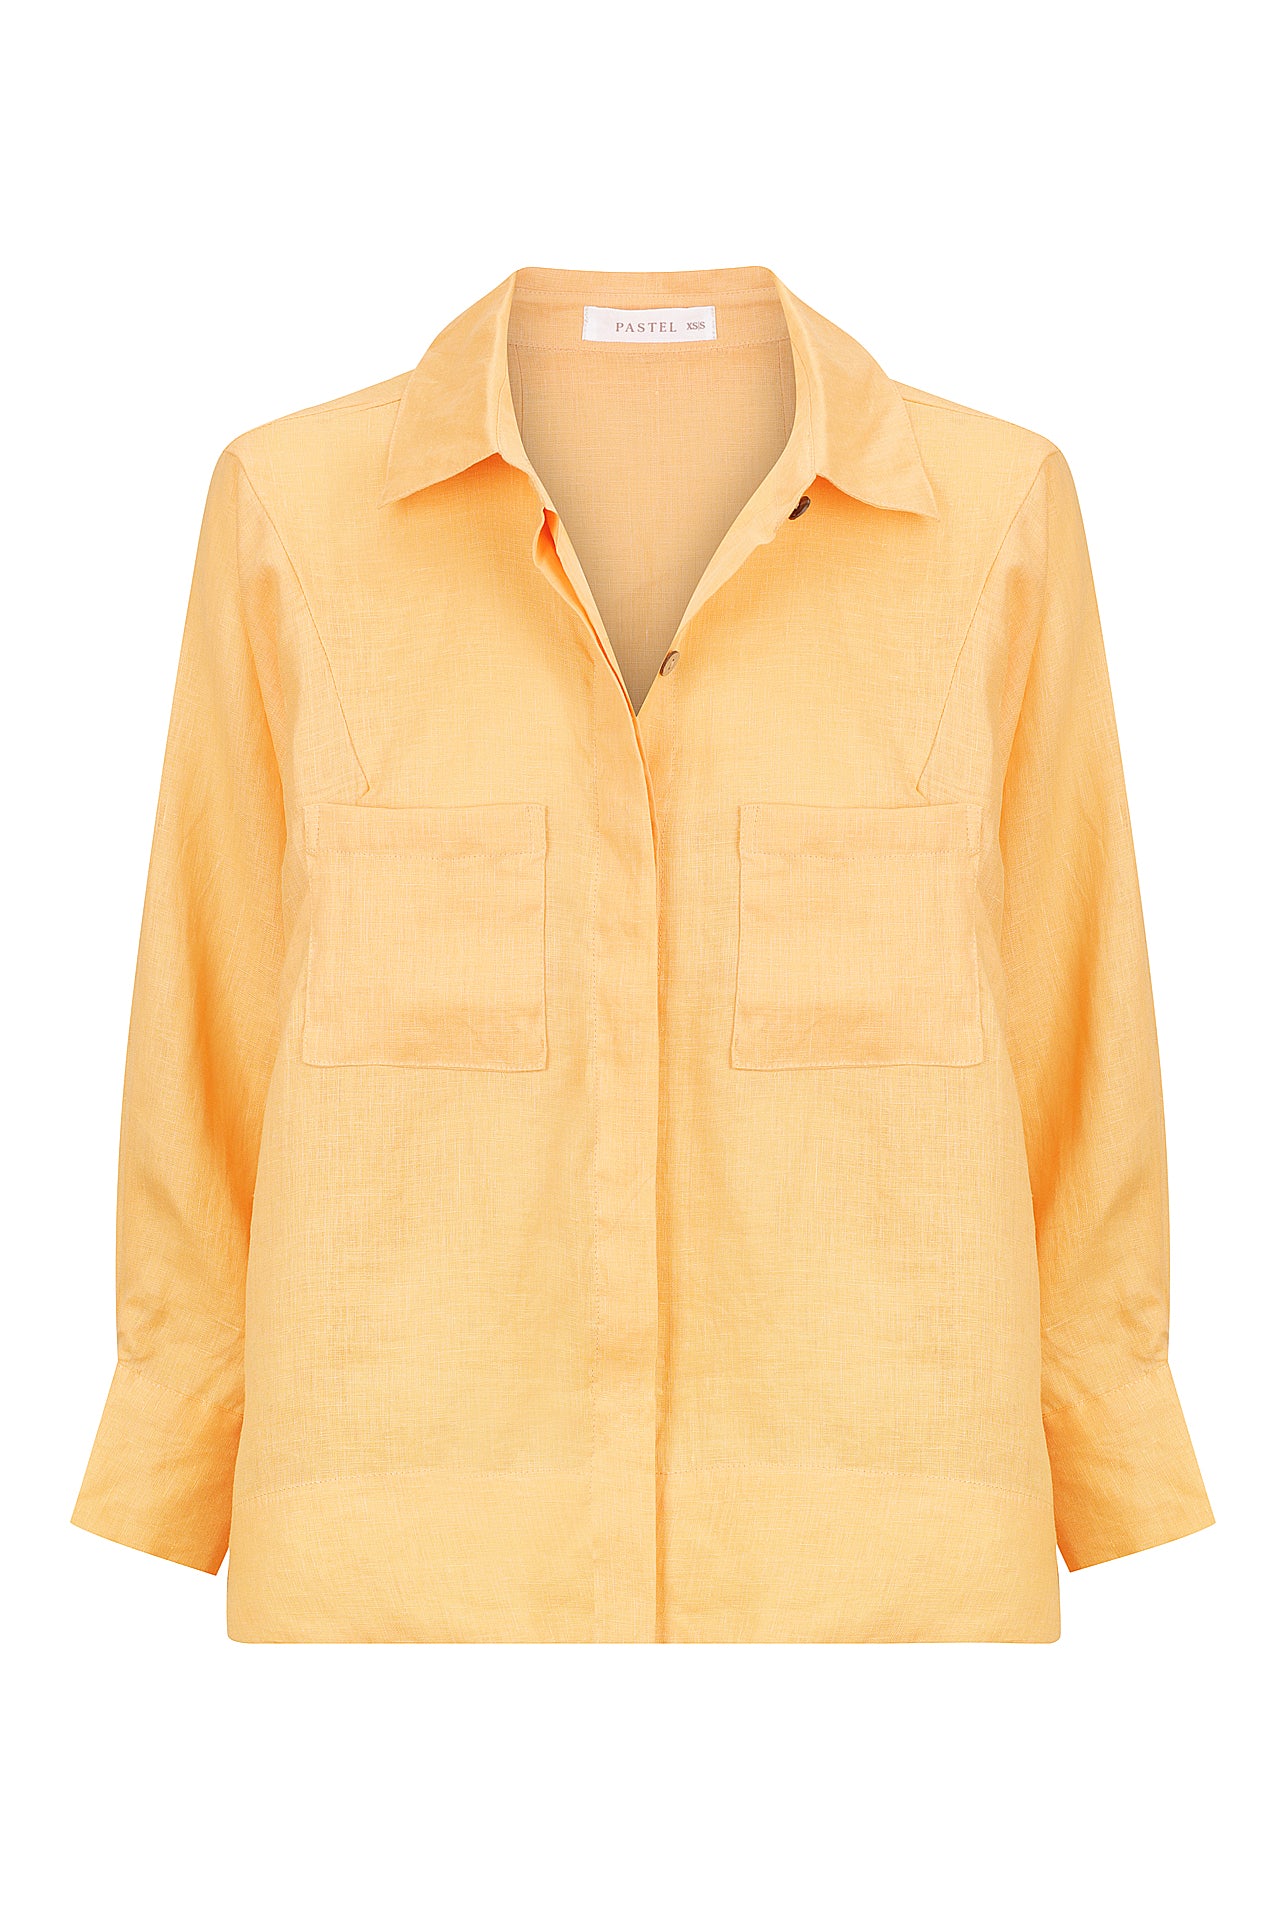 Solana 3/4 Sleeve Button Up Shirt - Melon